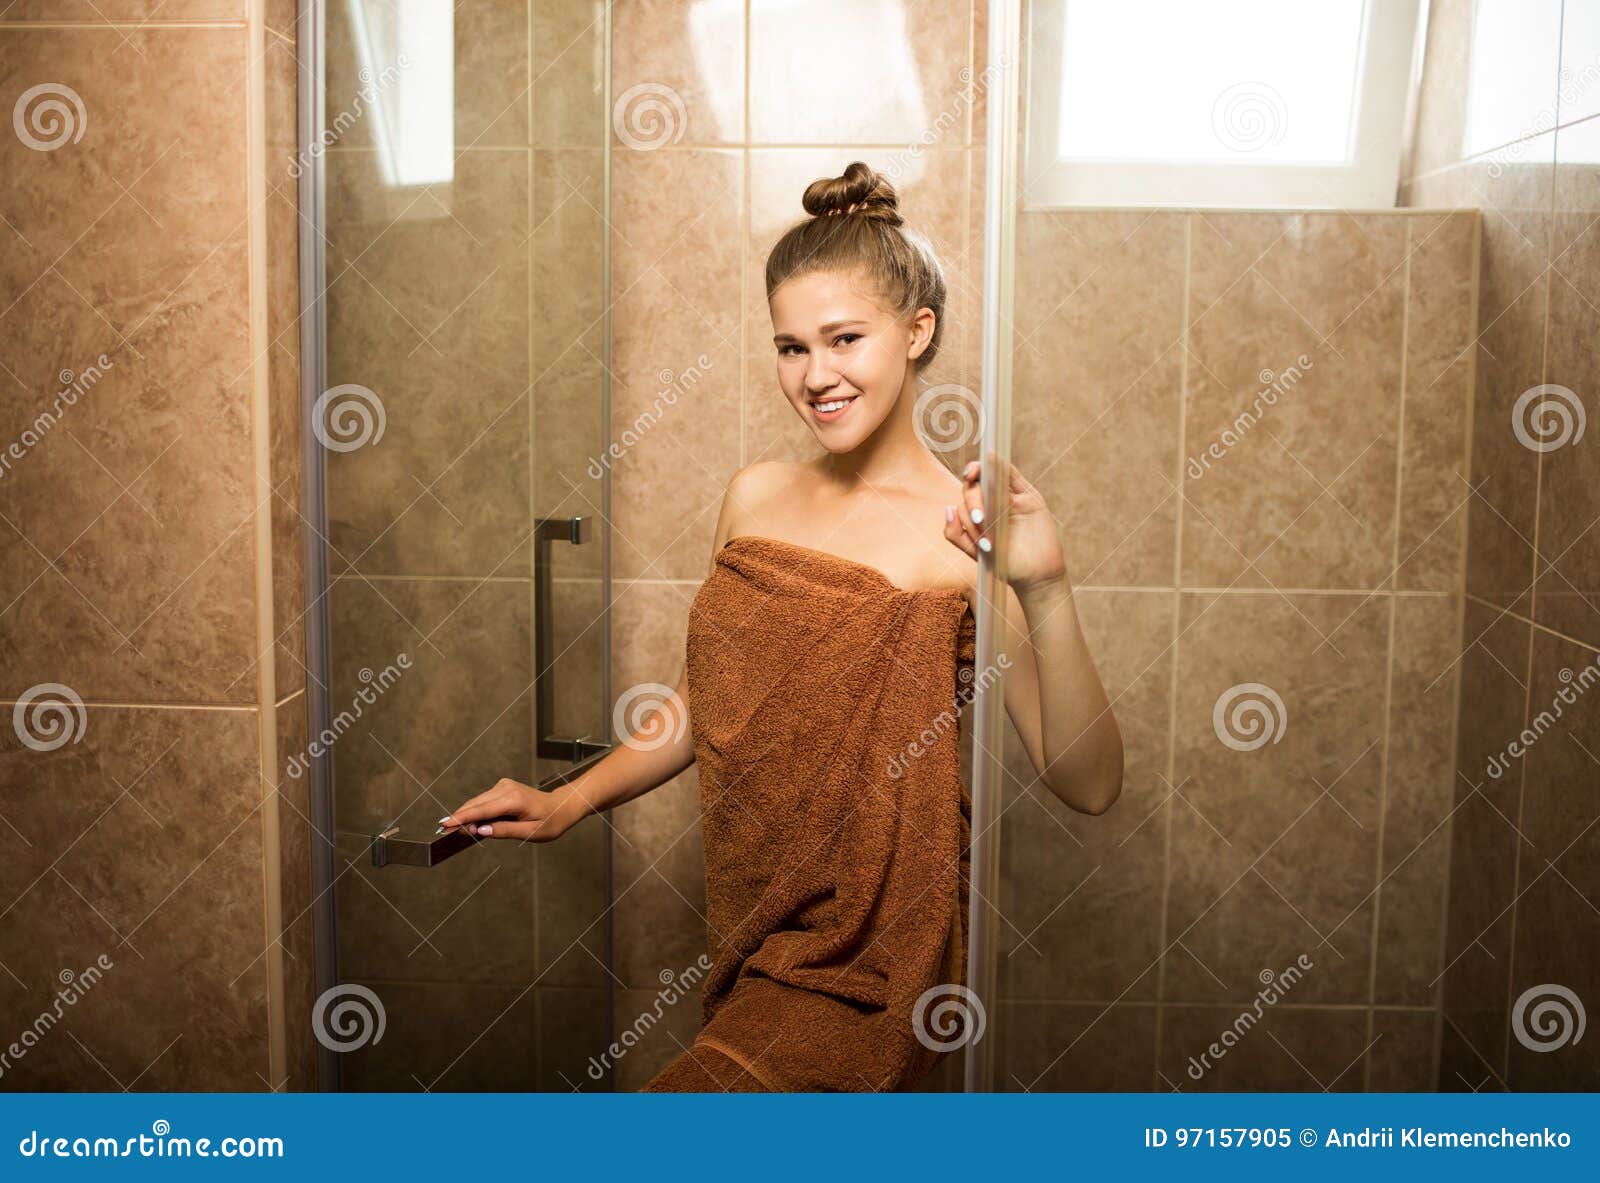 alison inverarity add photo sexy babe in shower